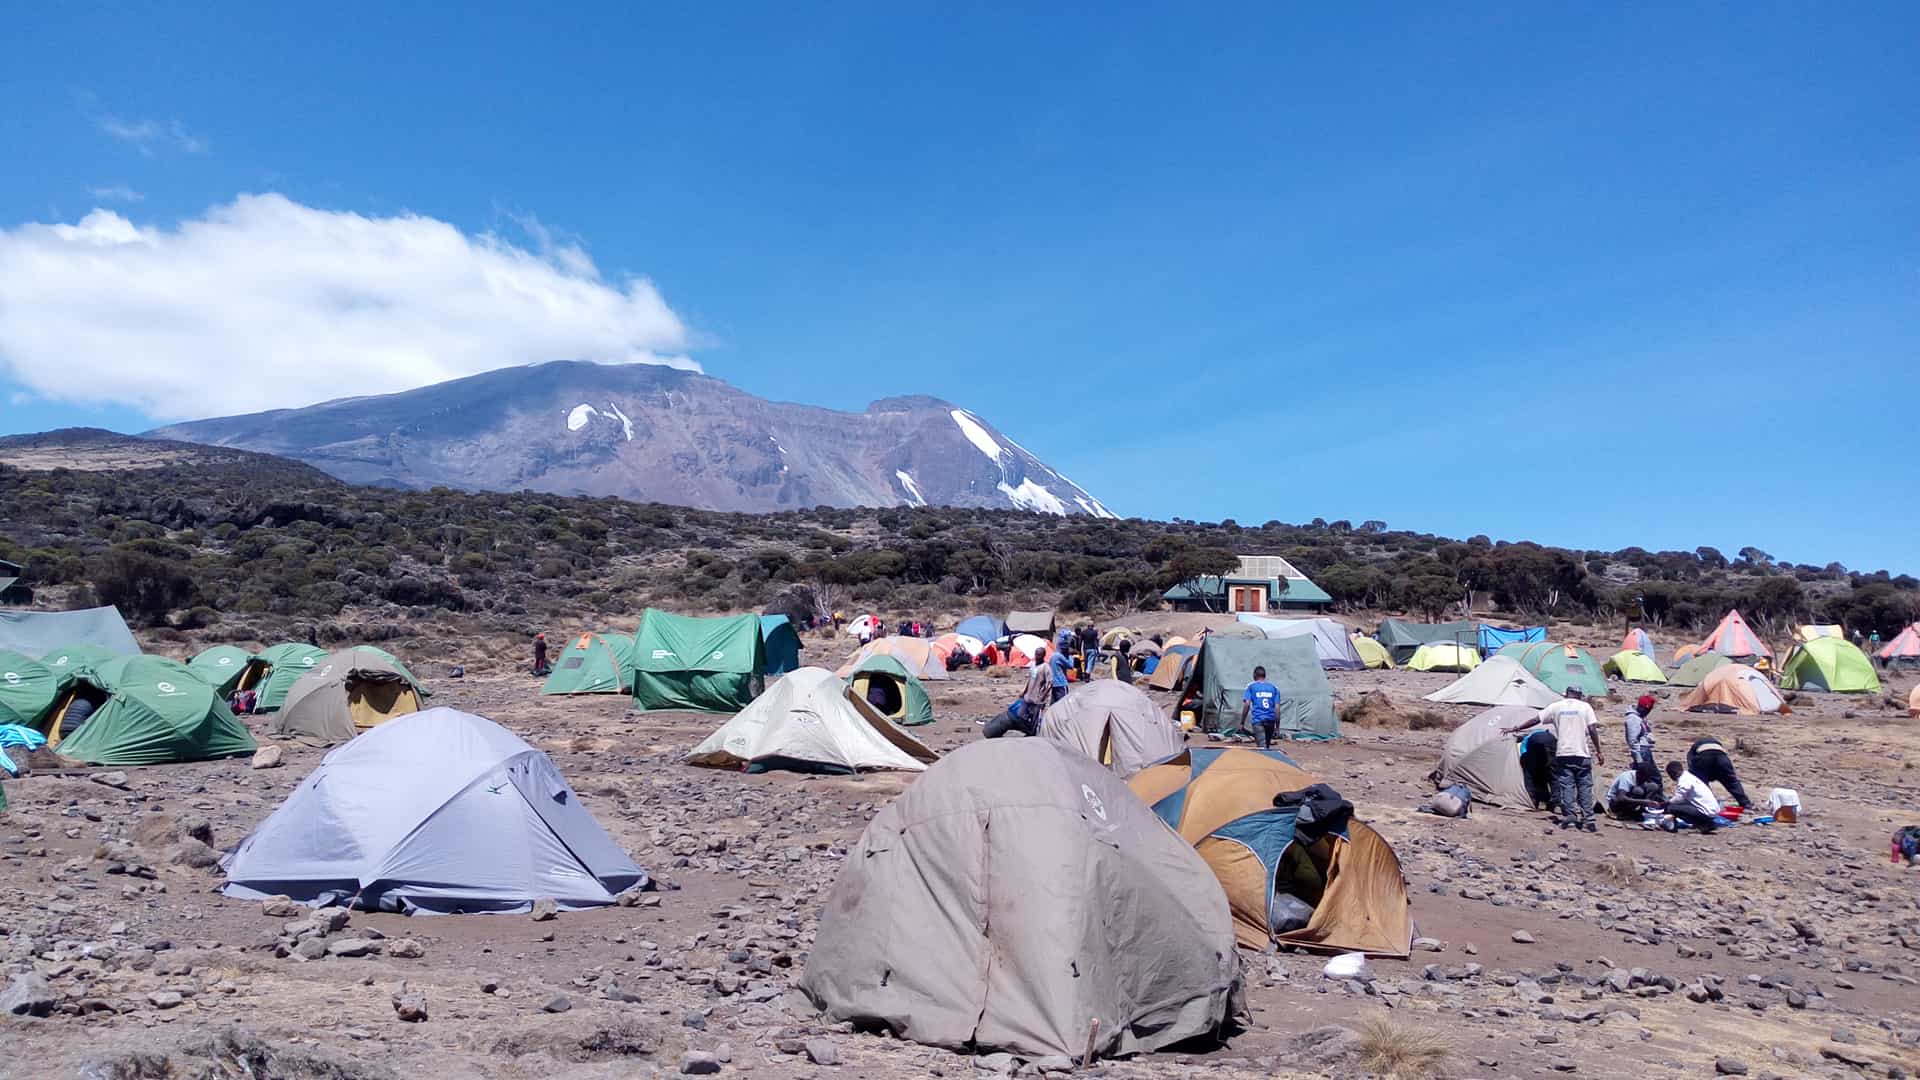 Where do you sleep on Kilimanjaro